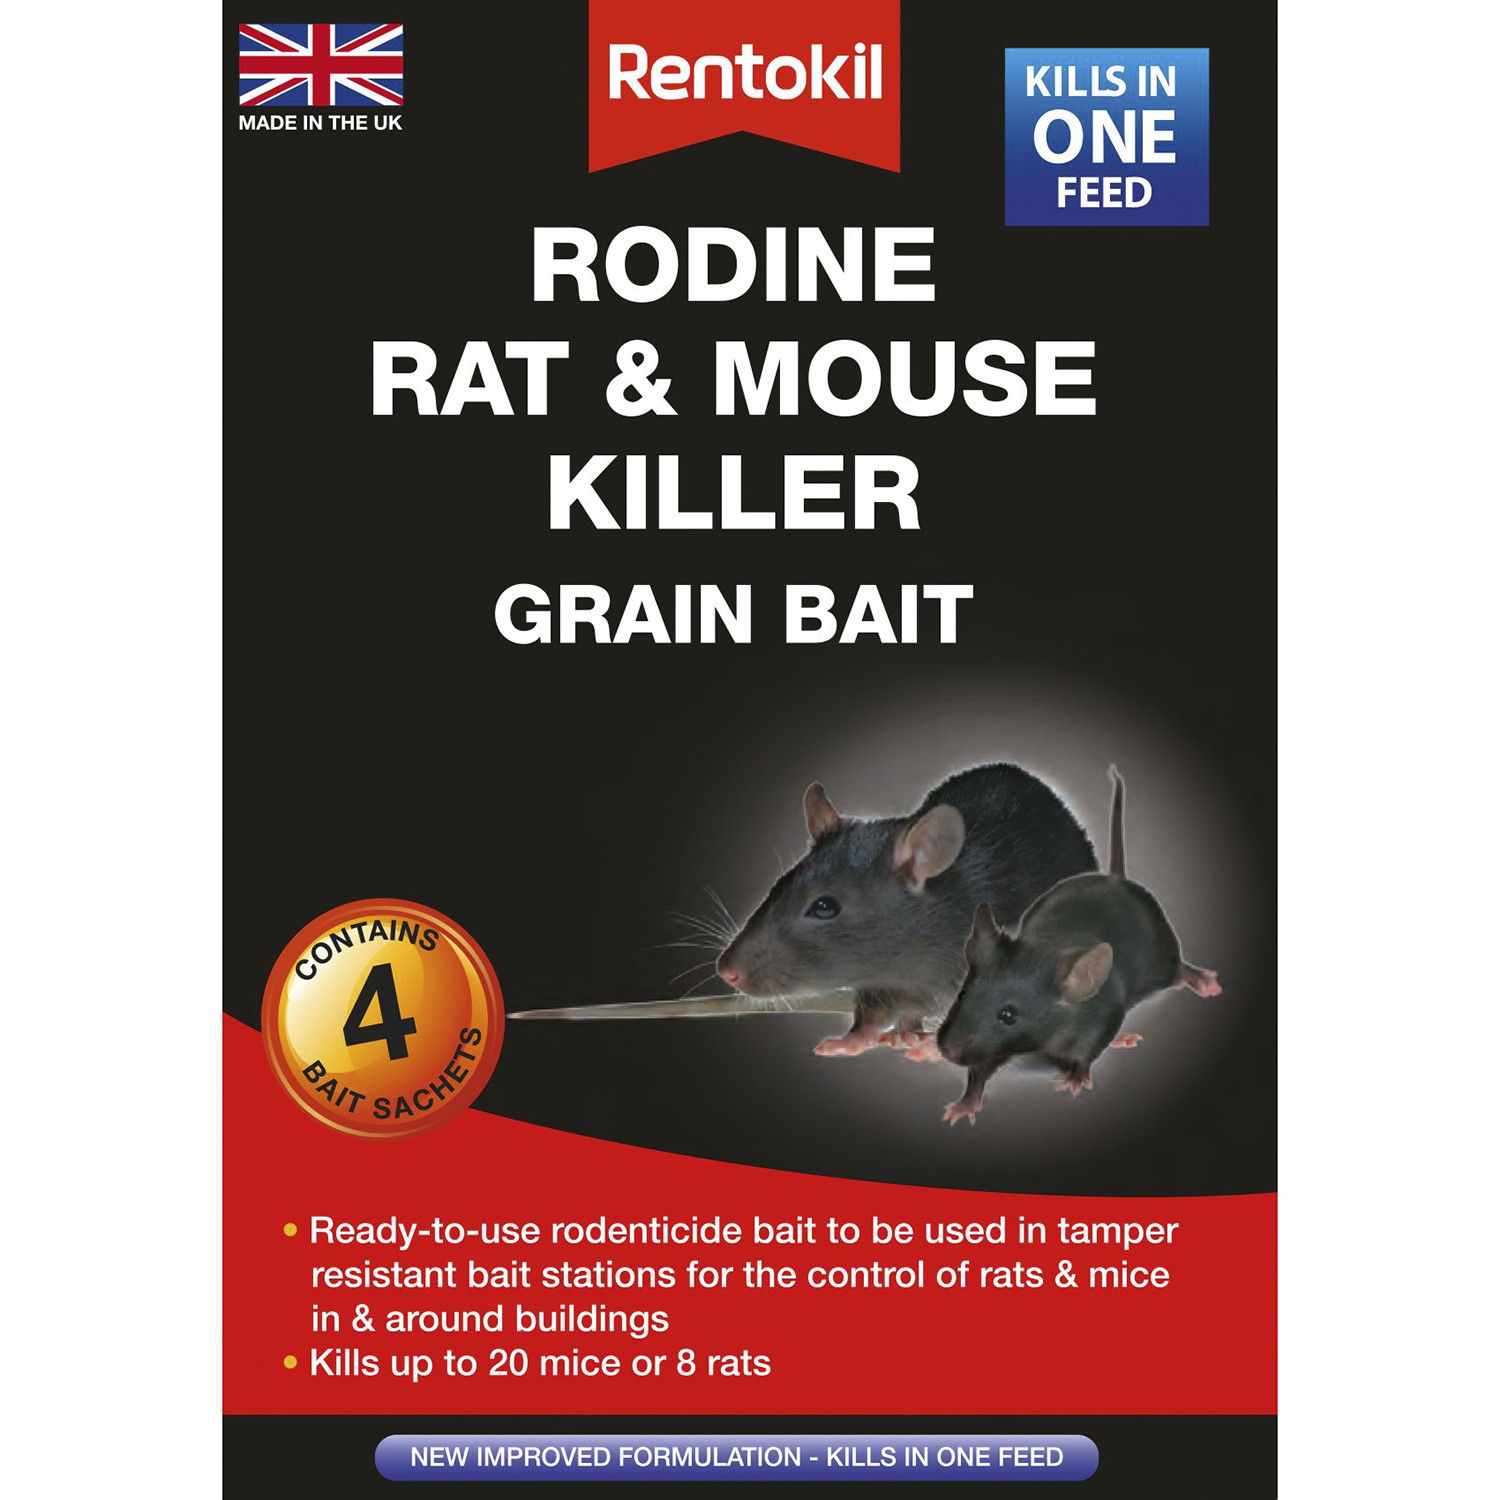 Rentokil Rodine Rat And Mouse Killer Grain Bait Image 1